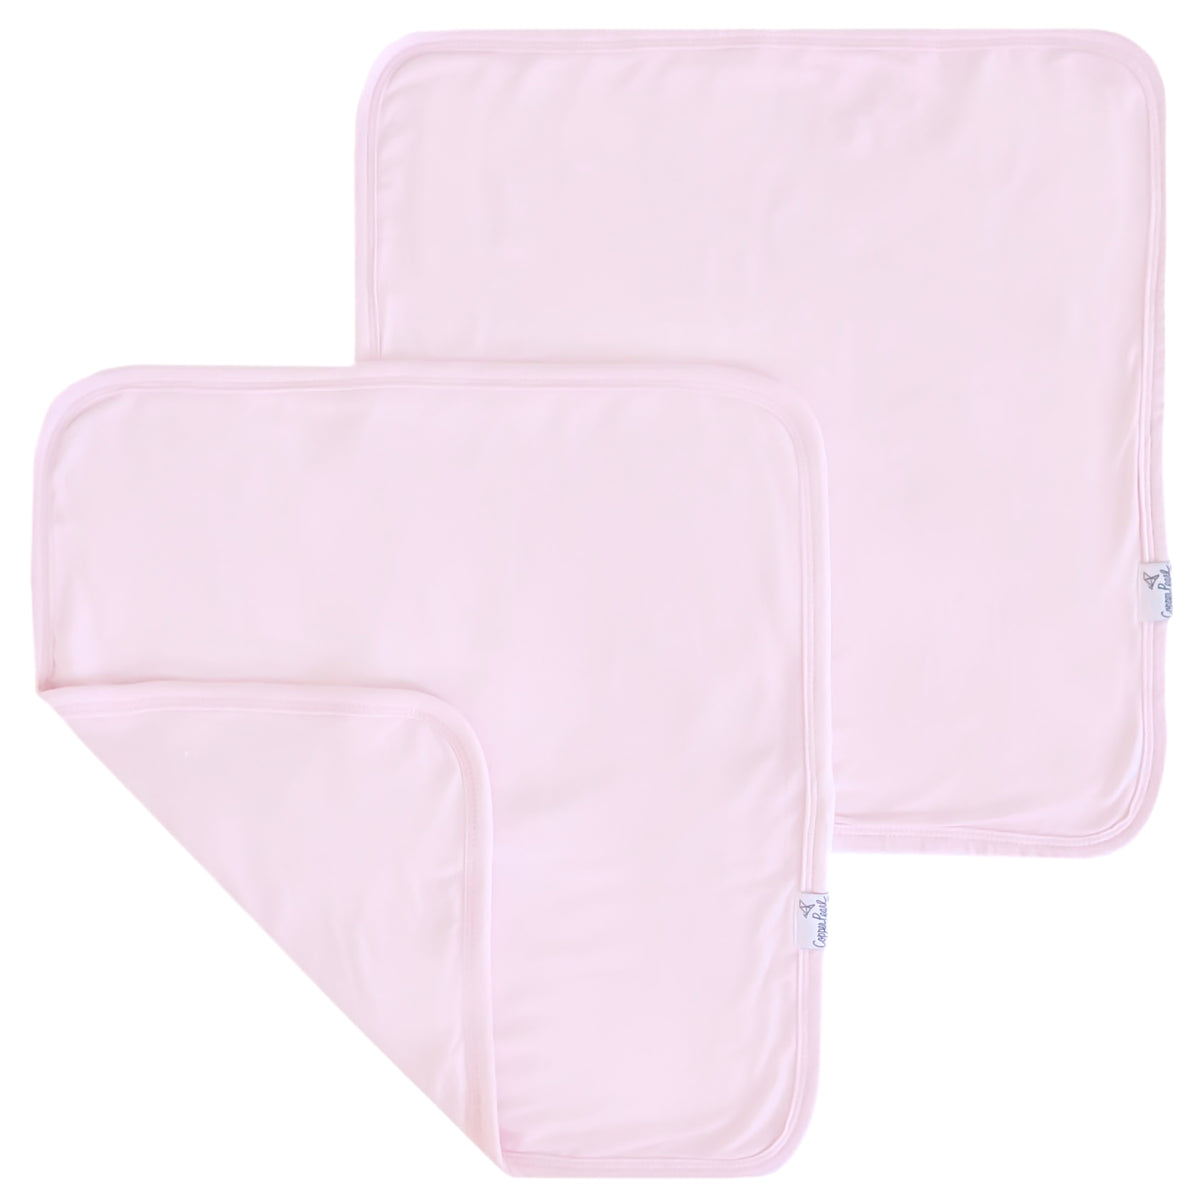 Three-Layer Security Blanket Set - Blossom